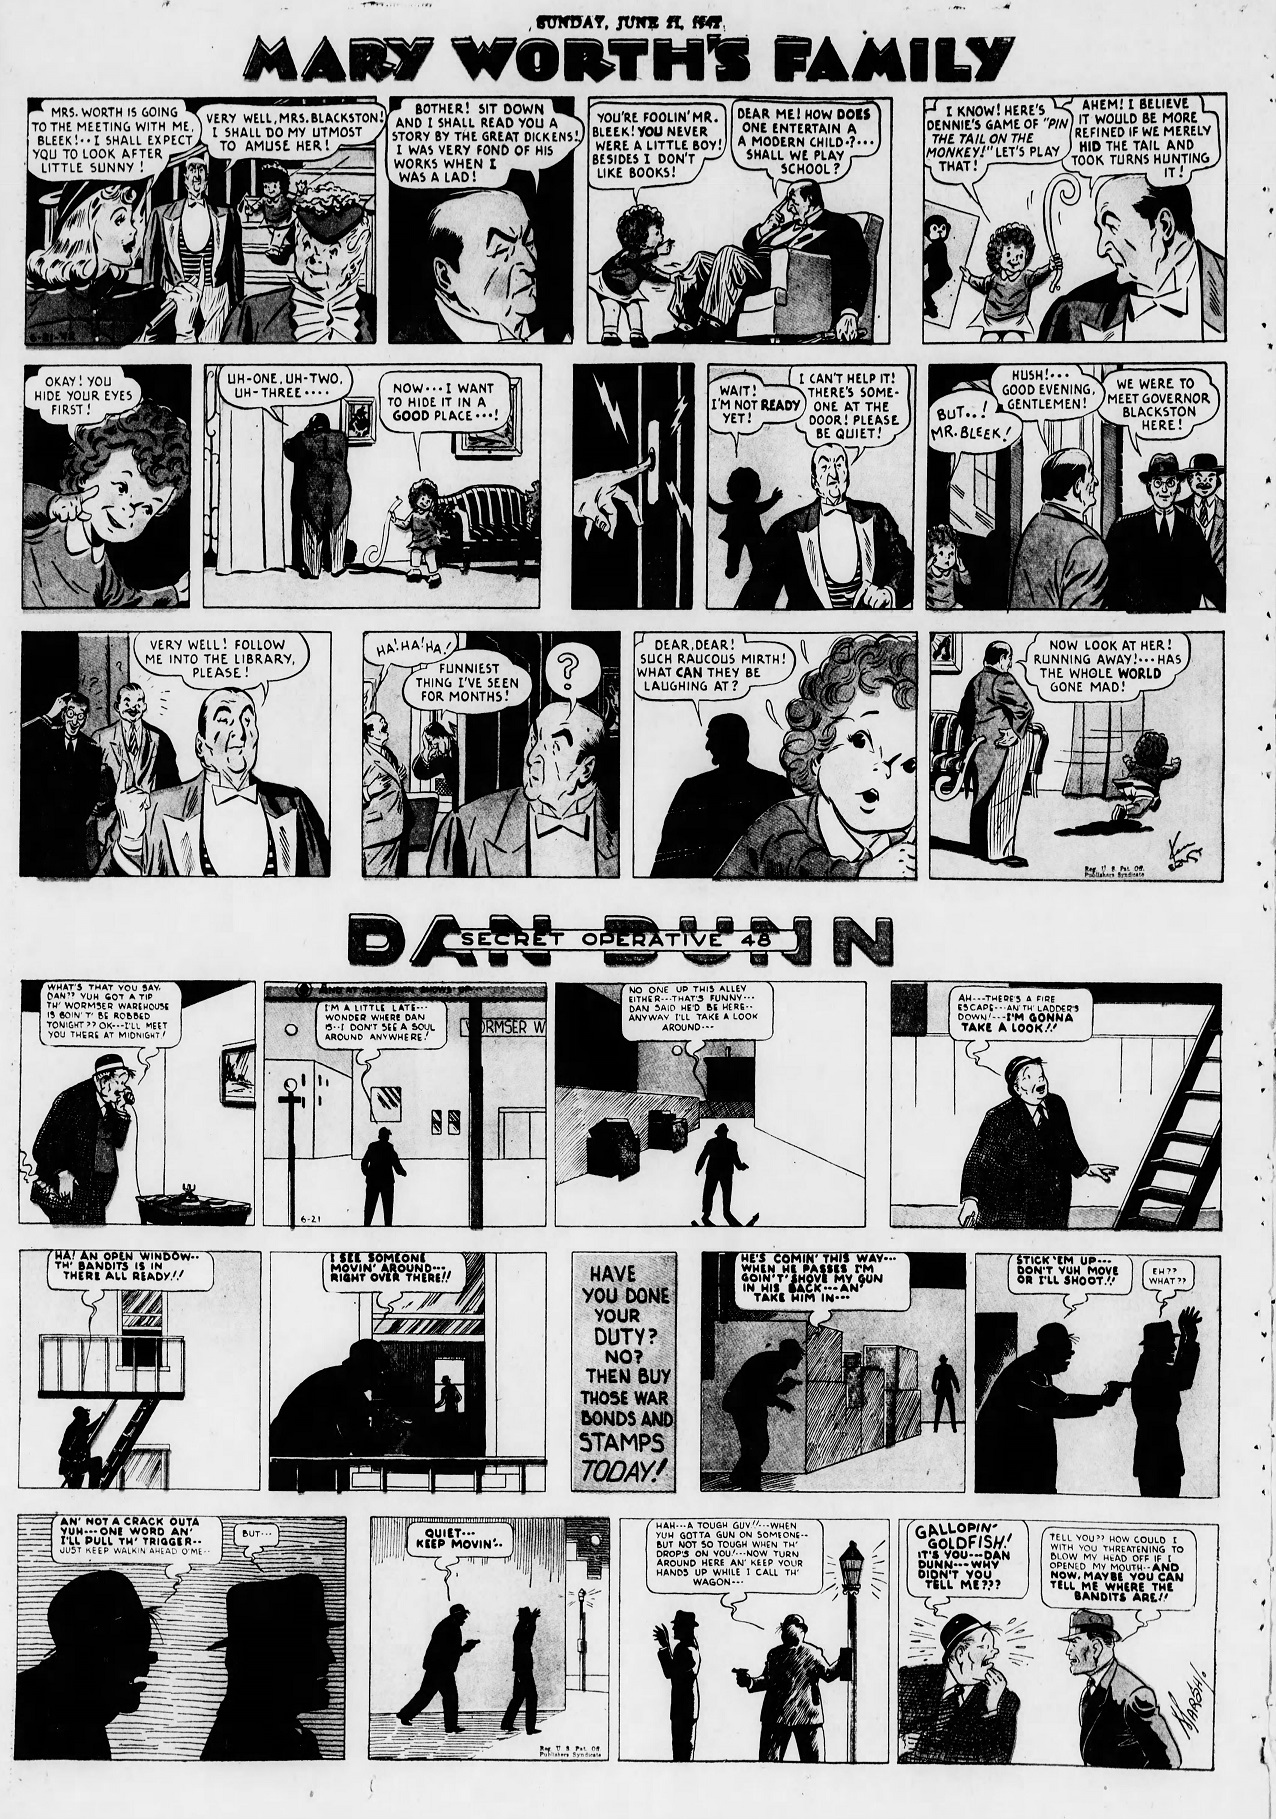 The_Brooklyn_Daily_Eagle_Sun__Jun_21__1942_(7).jpg